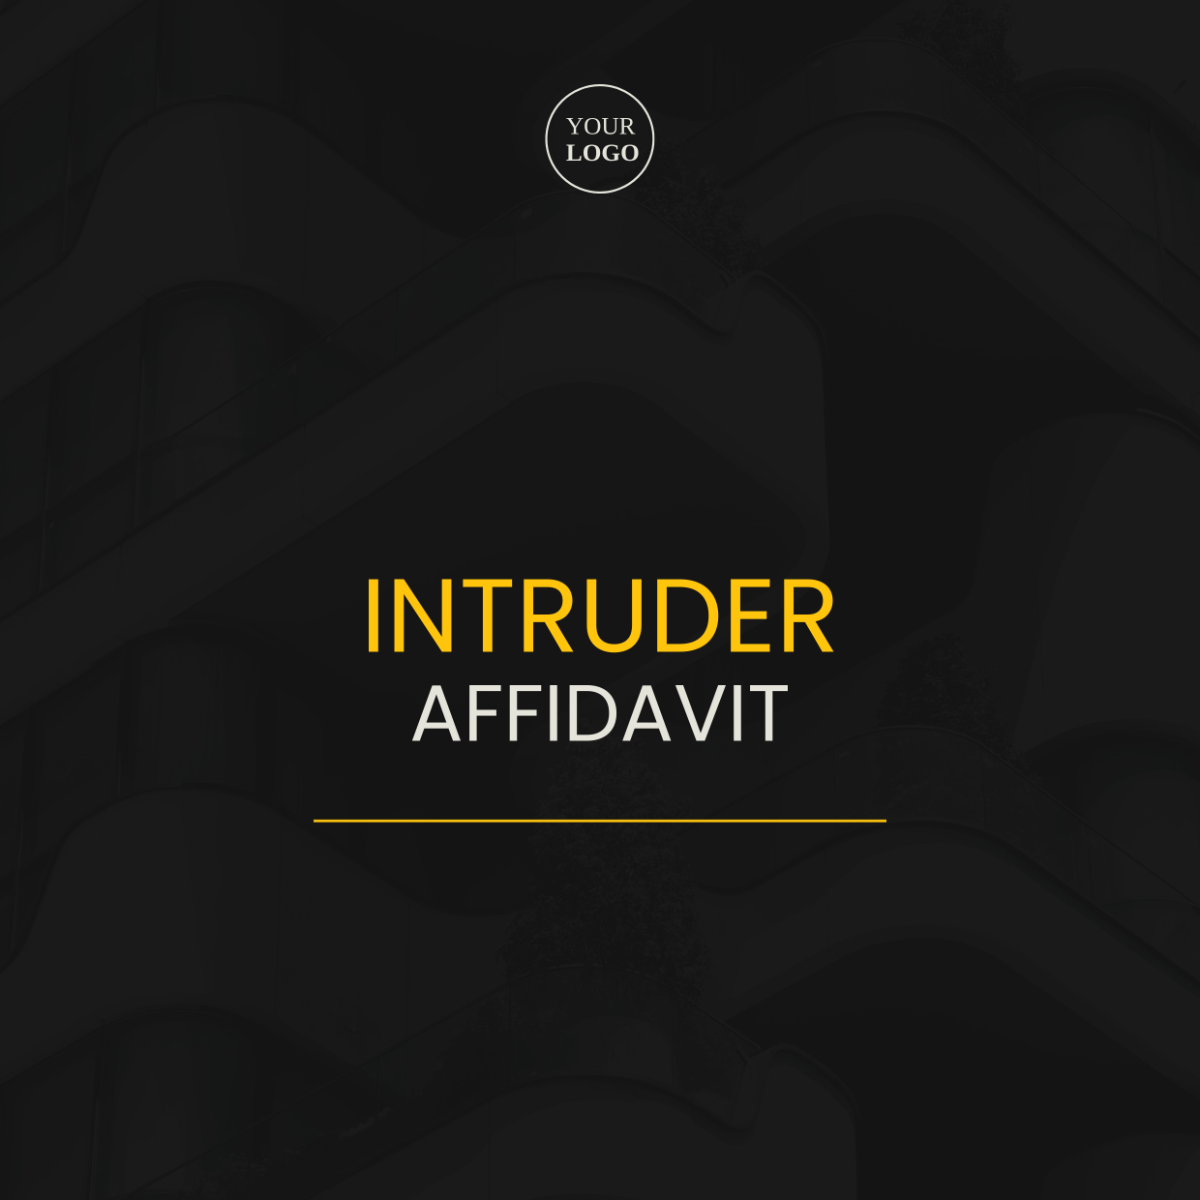 Intruder Affidavit Template